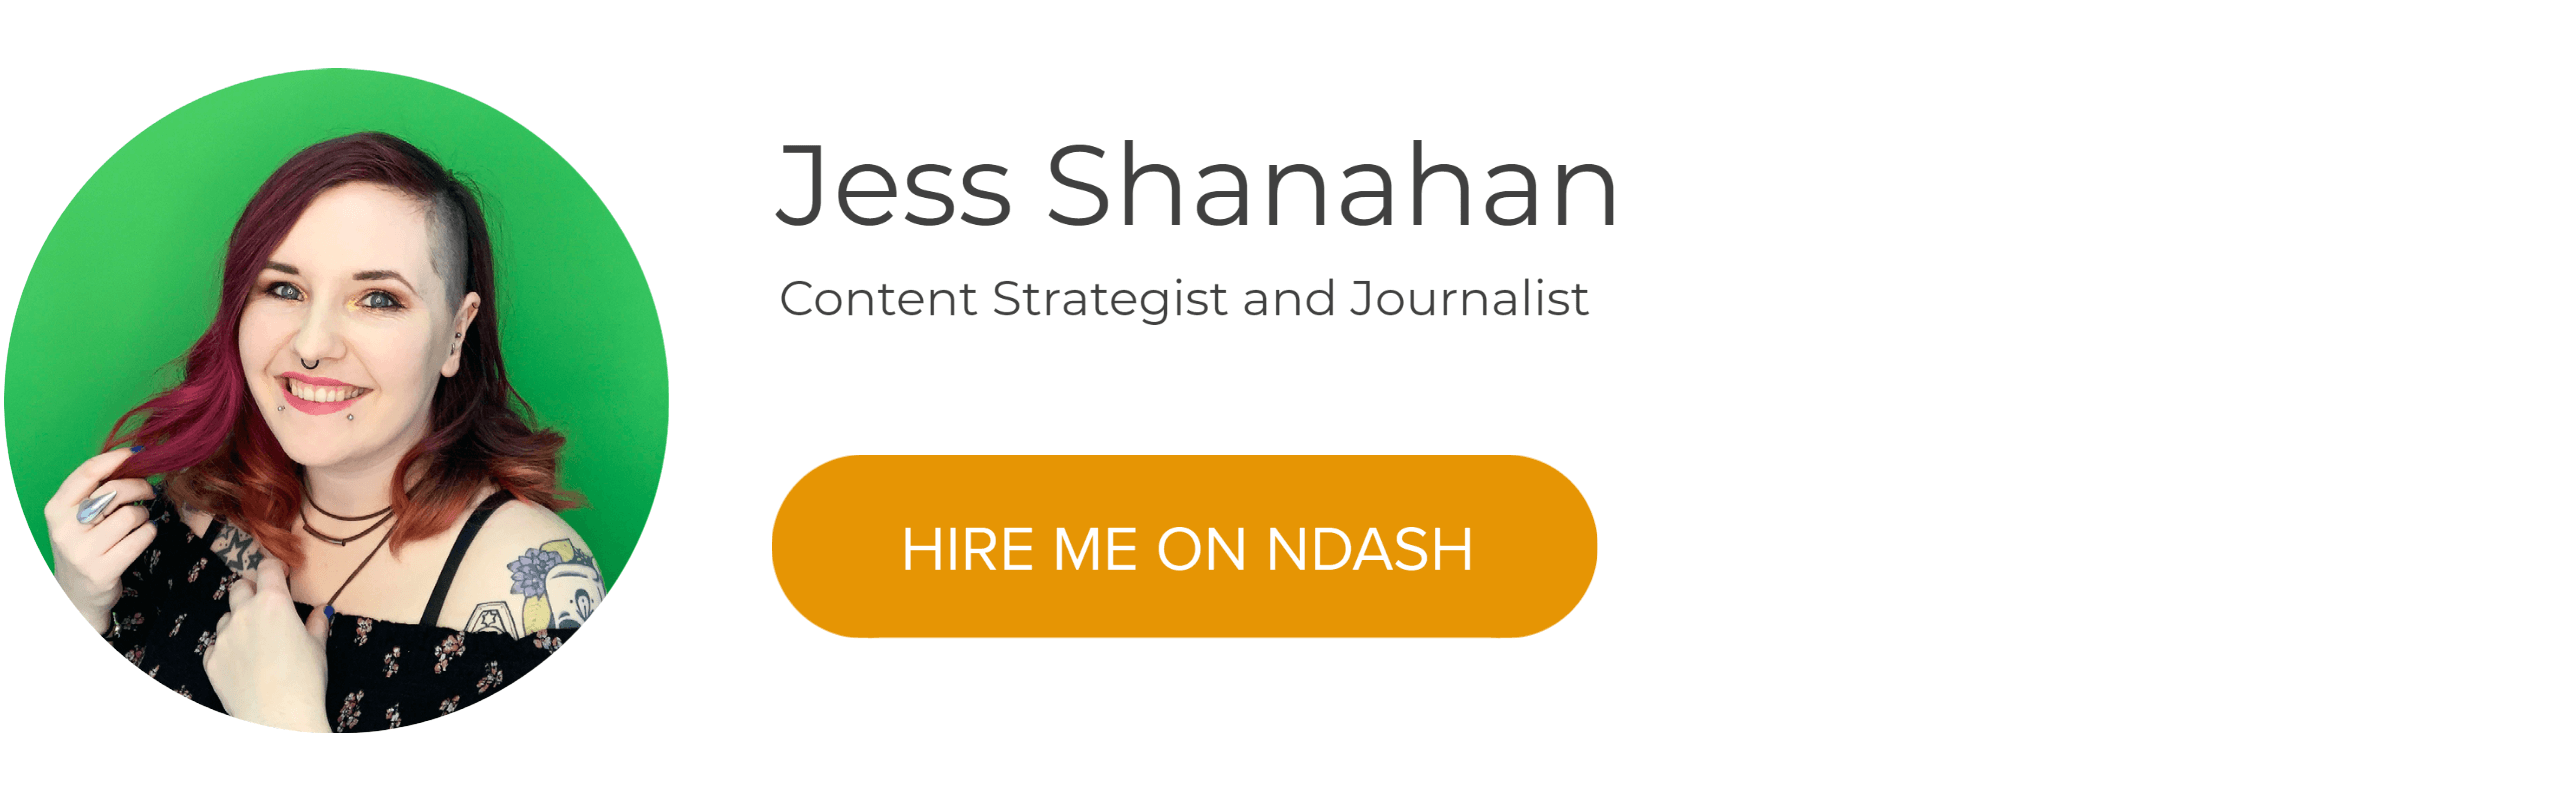 Freight industry writer -- Jess Shanahan: Content Strategist & Journalist